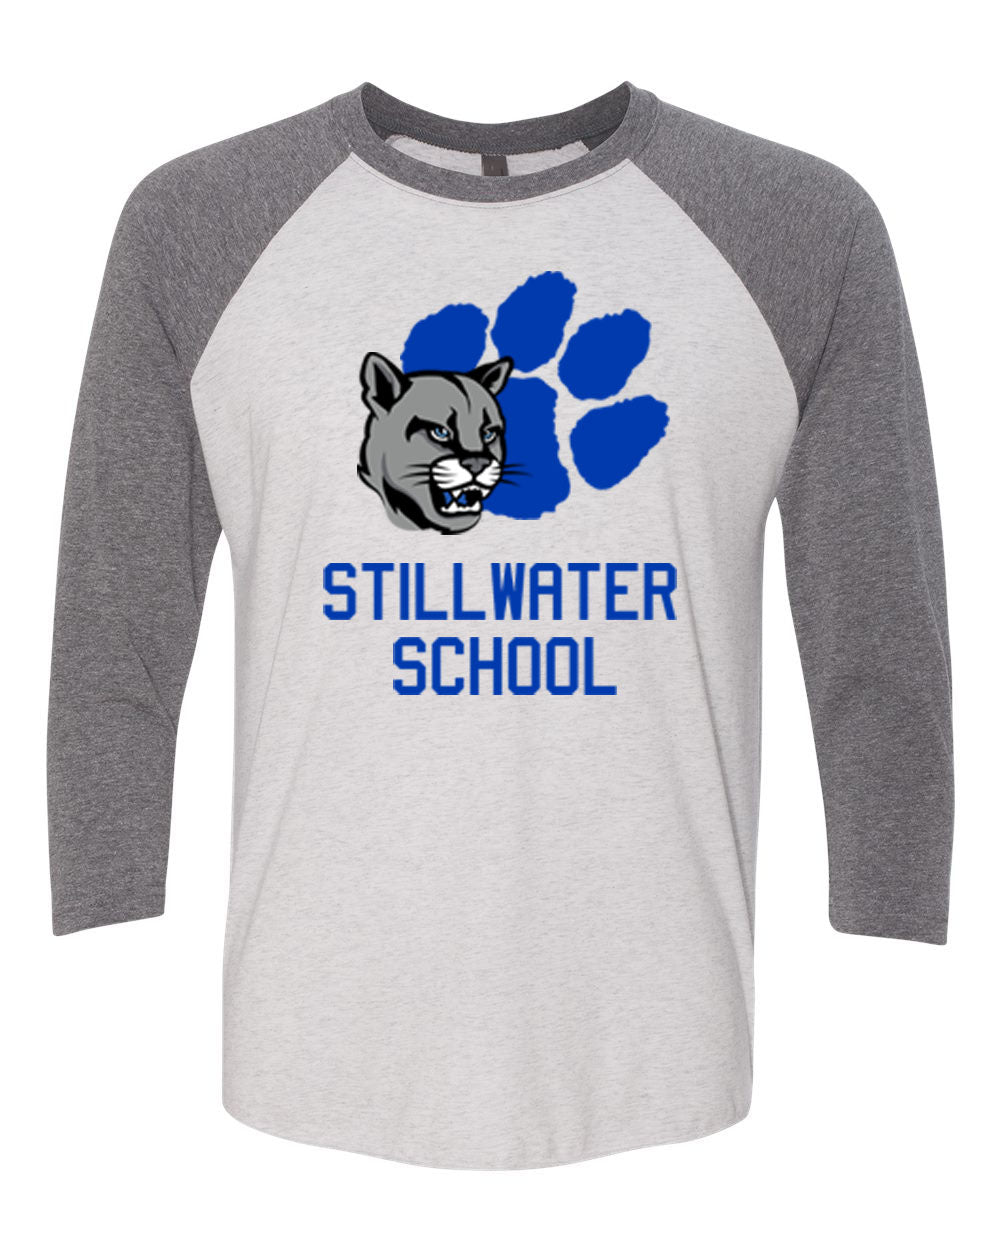 Stillwater Design 8 raglan shirt